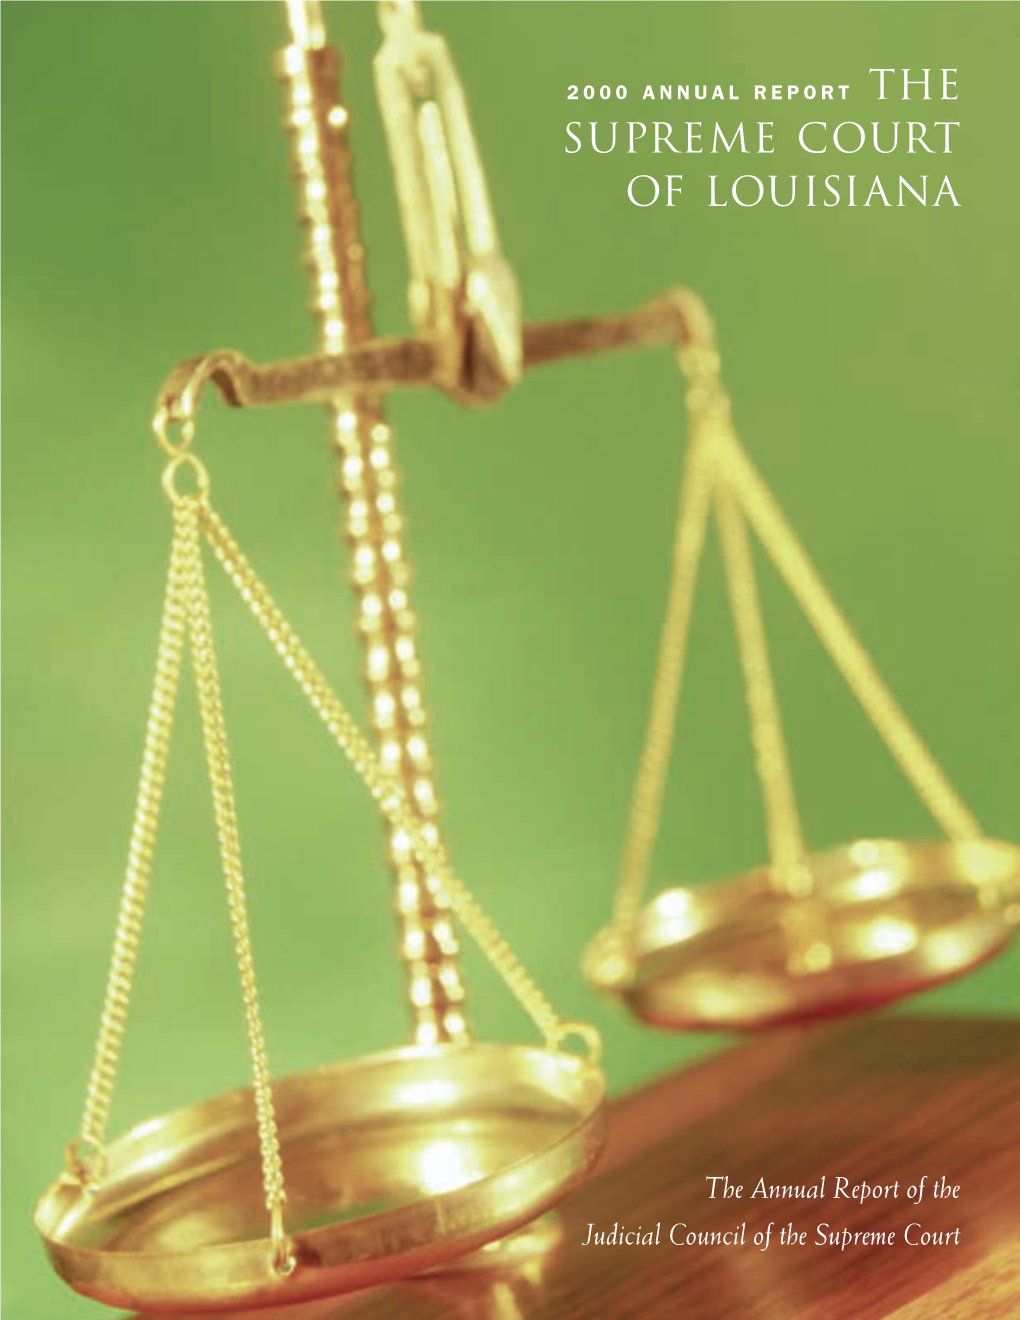 The Supreme Court of Louisiana